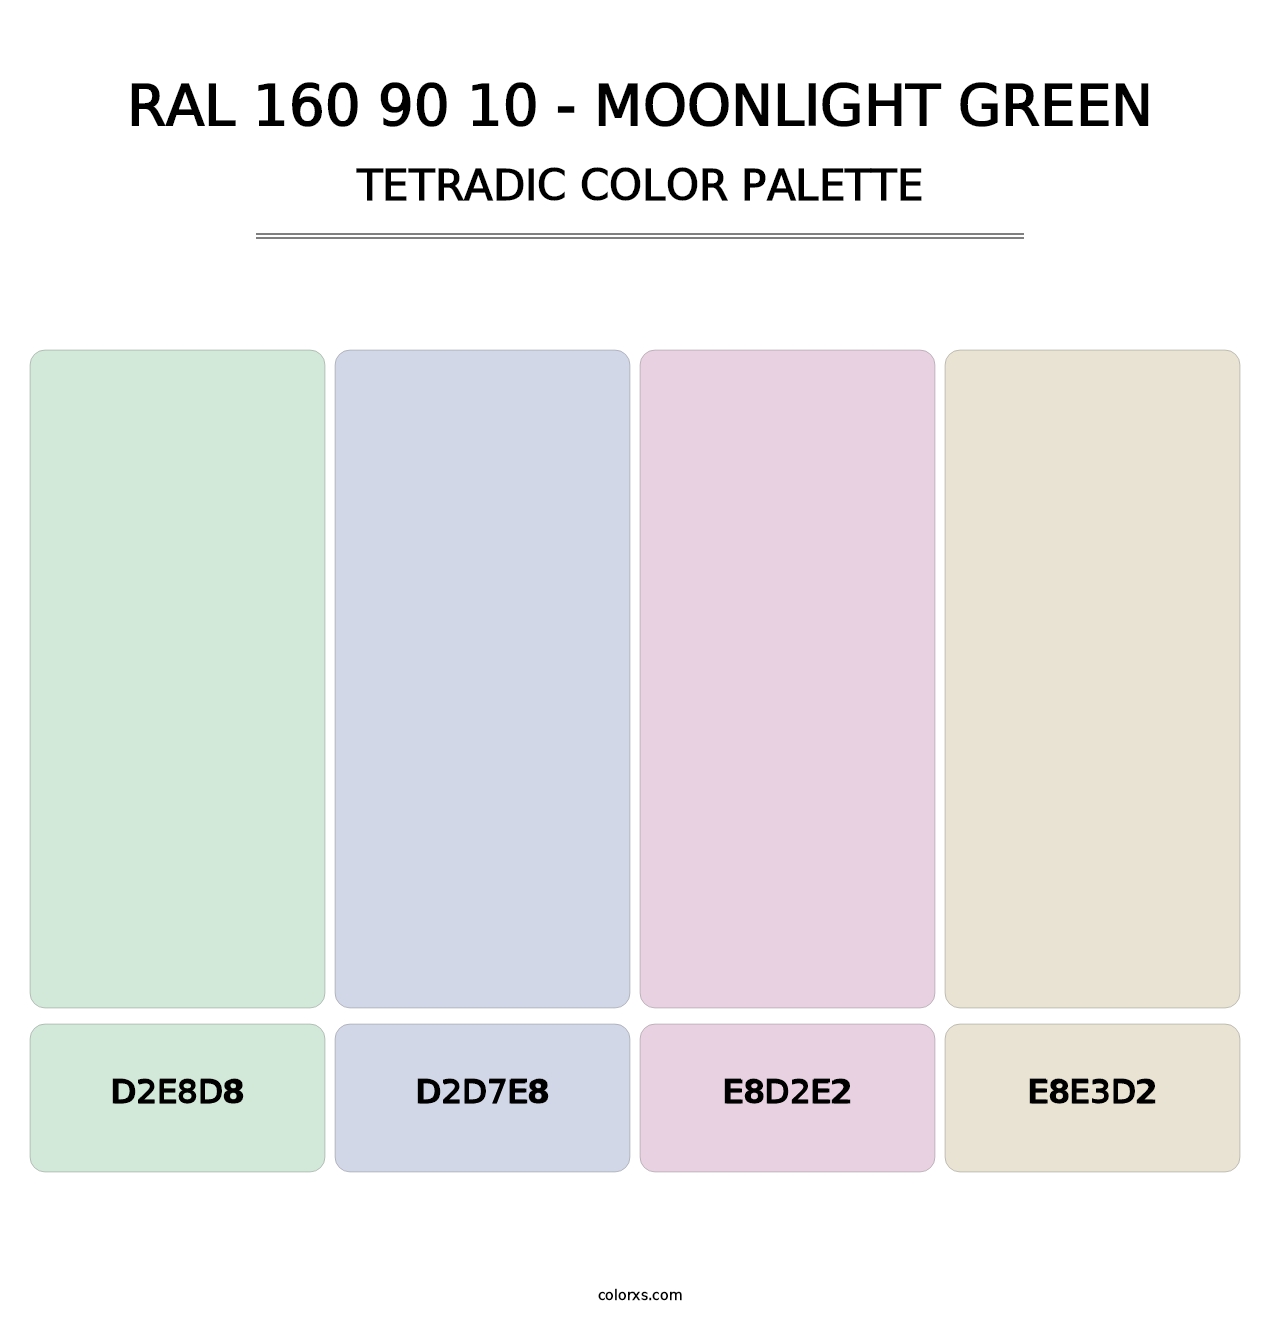 RAL 160 90 10 - Moonlight Green - Tetradic Color Palette